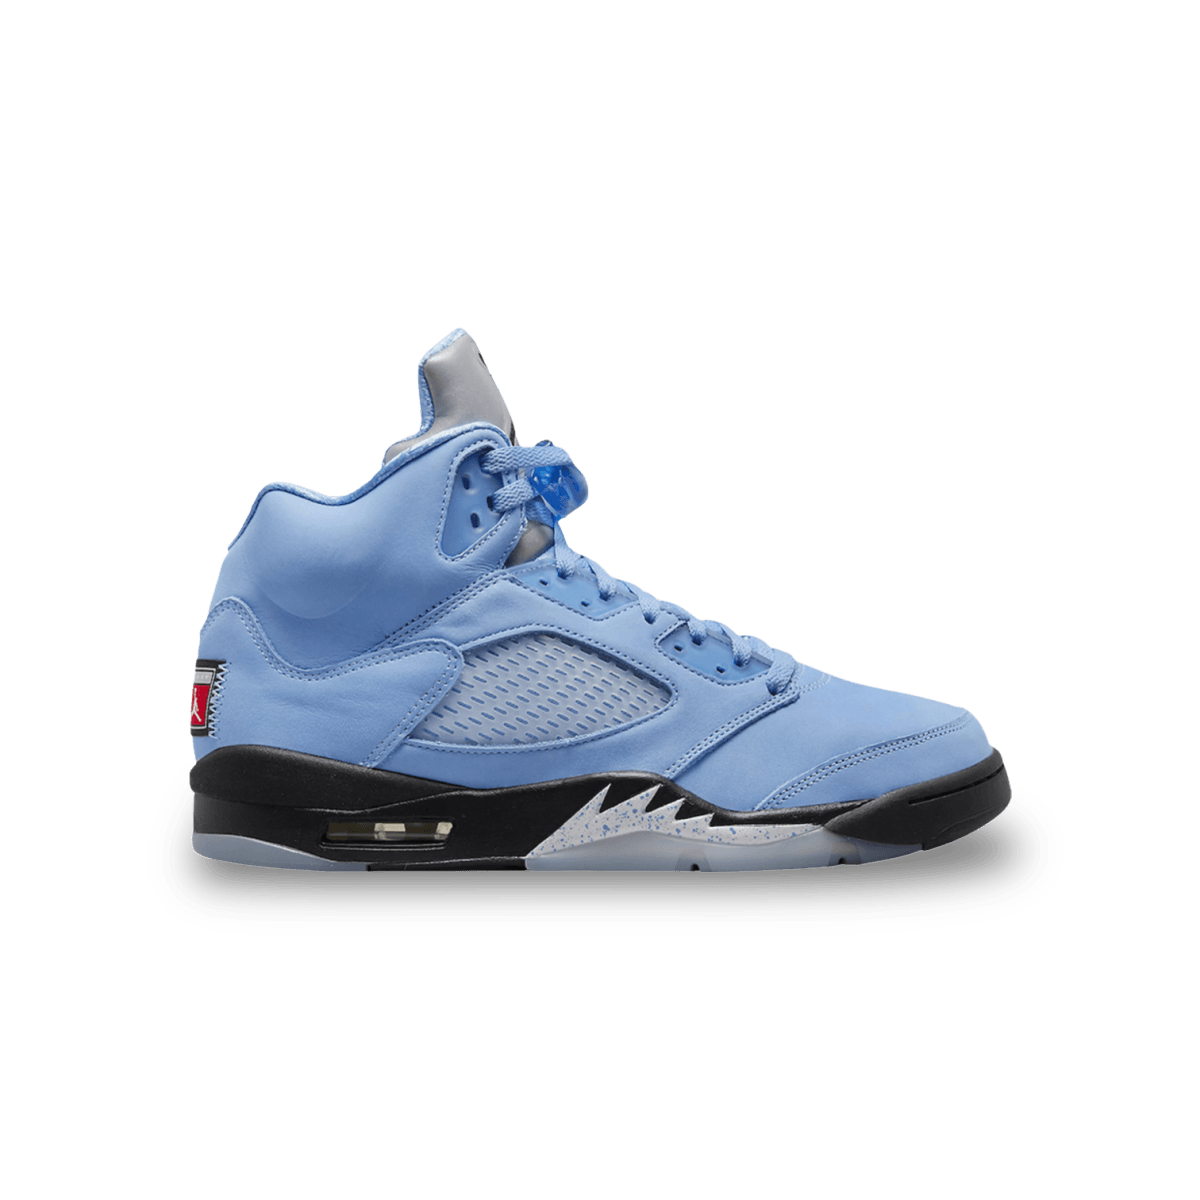 Air Jordan 5 Retro 'UNC' Blue - Mid Sneaker - Jordan - Jawns on Fire